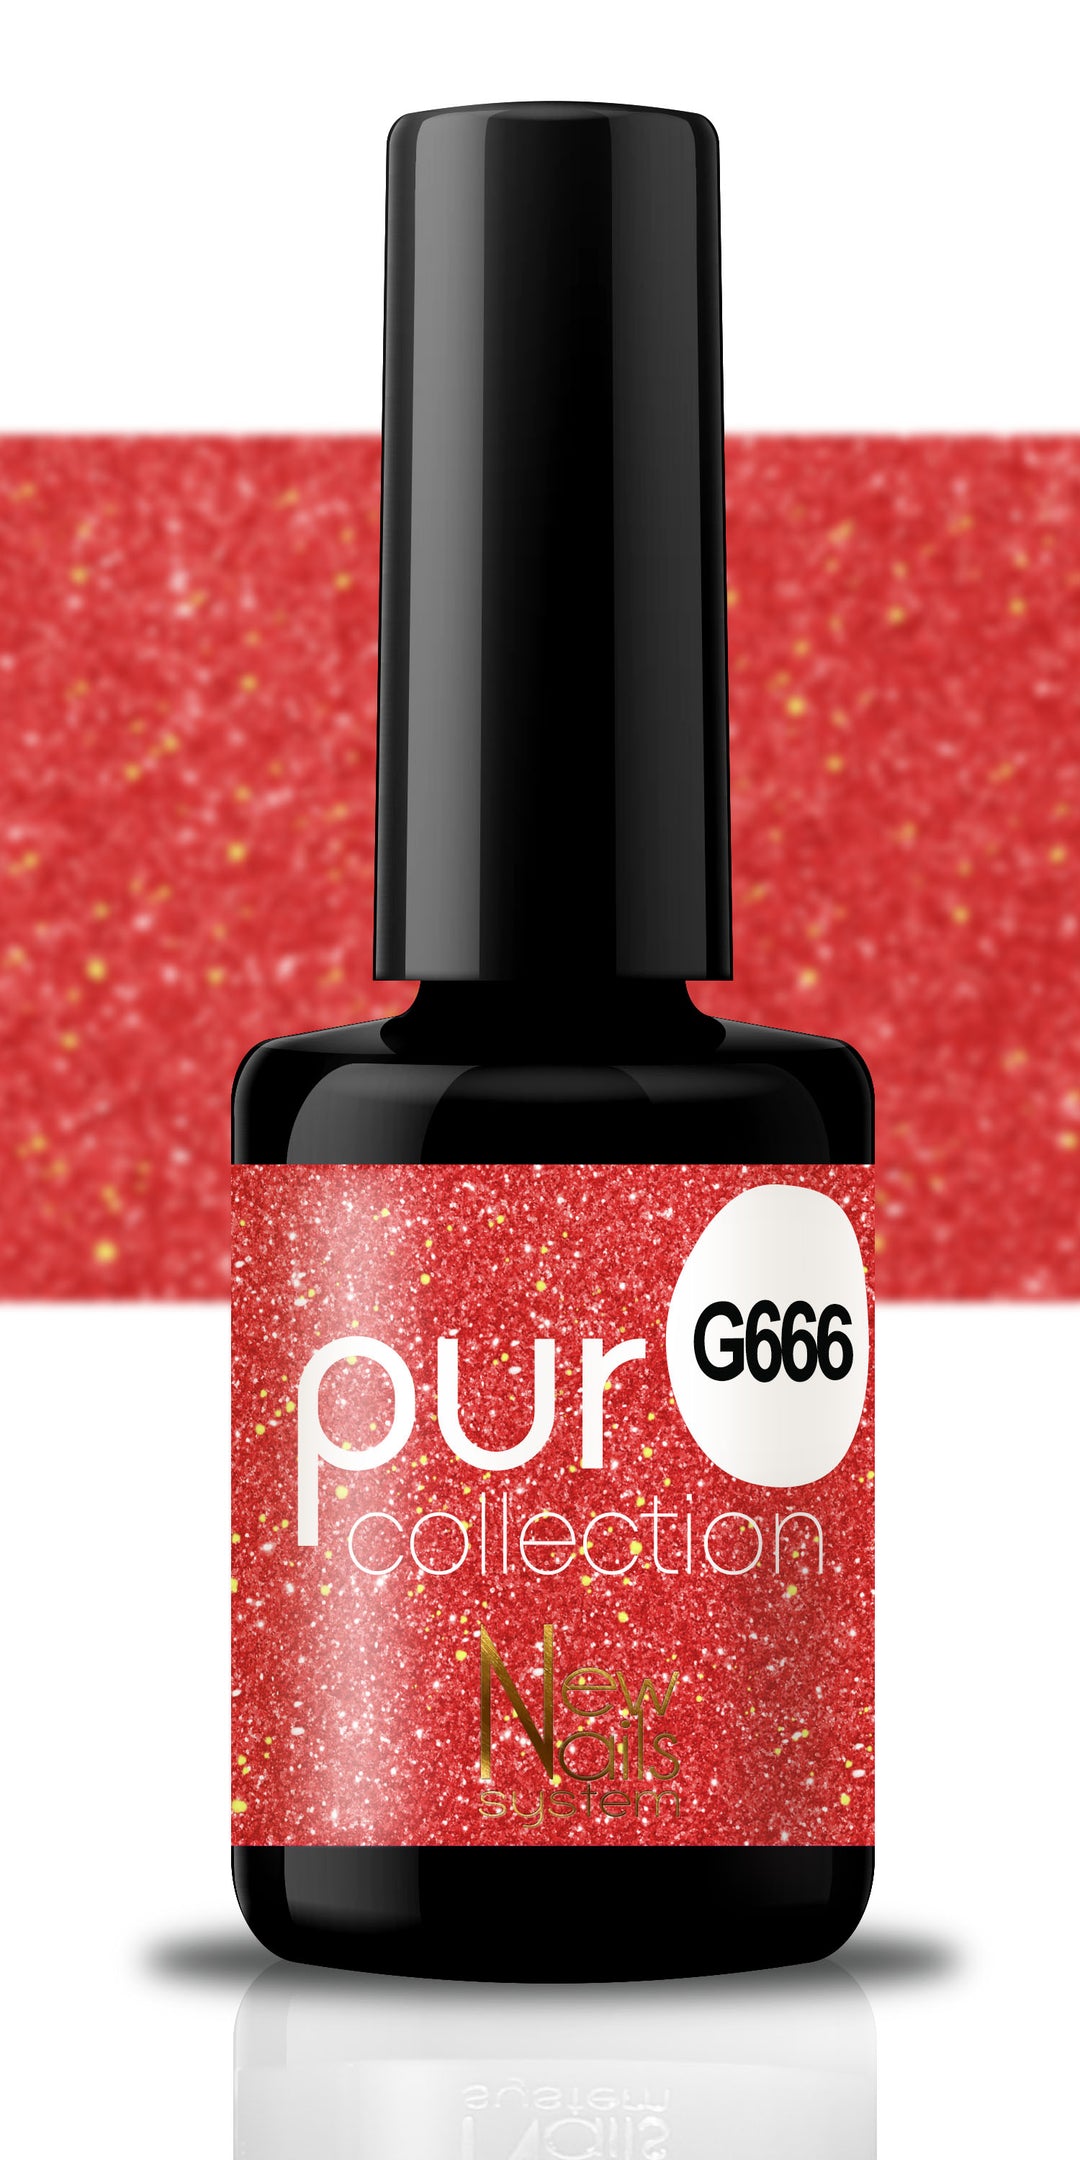 Puro collection G666 color gel polish 5ml